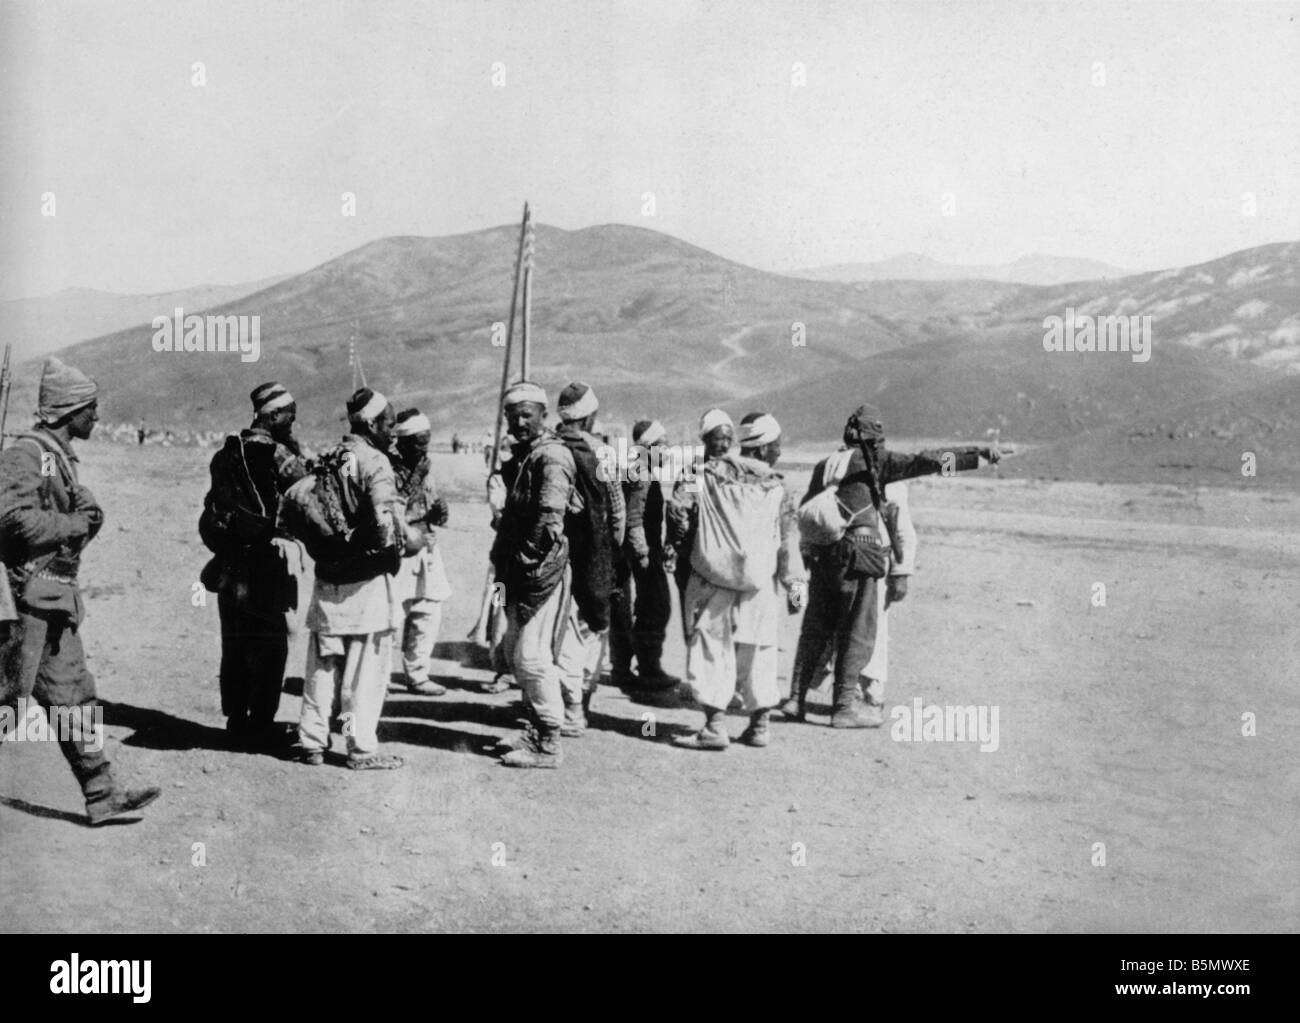 9TK 1915 0 0 A2 Turkish recruits in Taurus Photo 1915 World War 1 War in the Near East Turkish recruits in Taurus on the way to Stock Photo